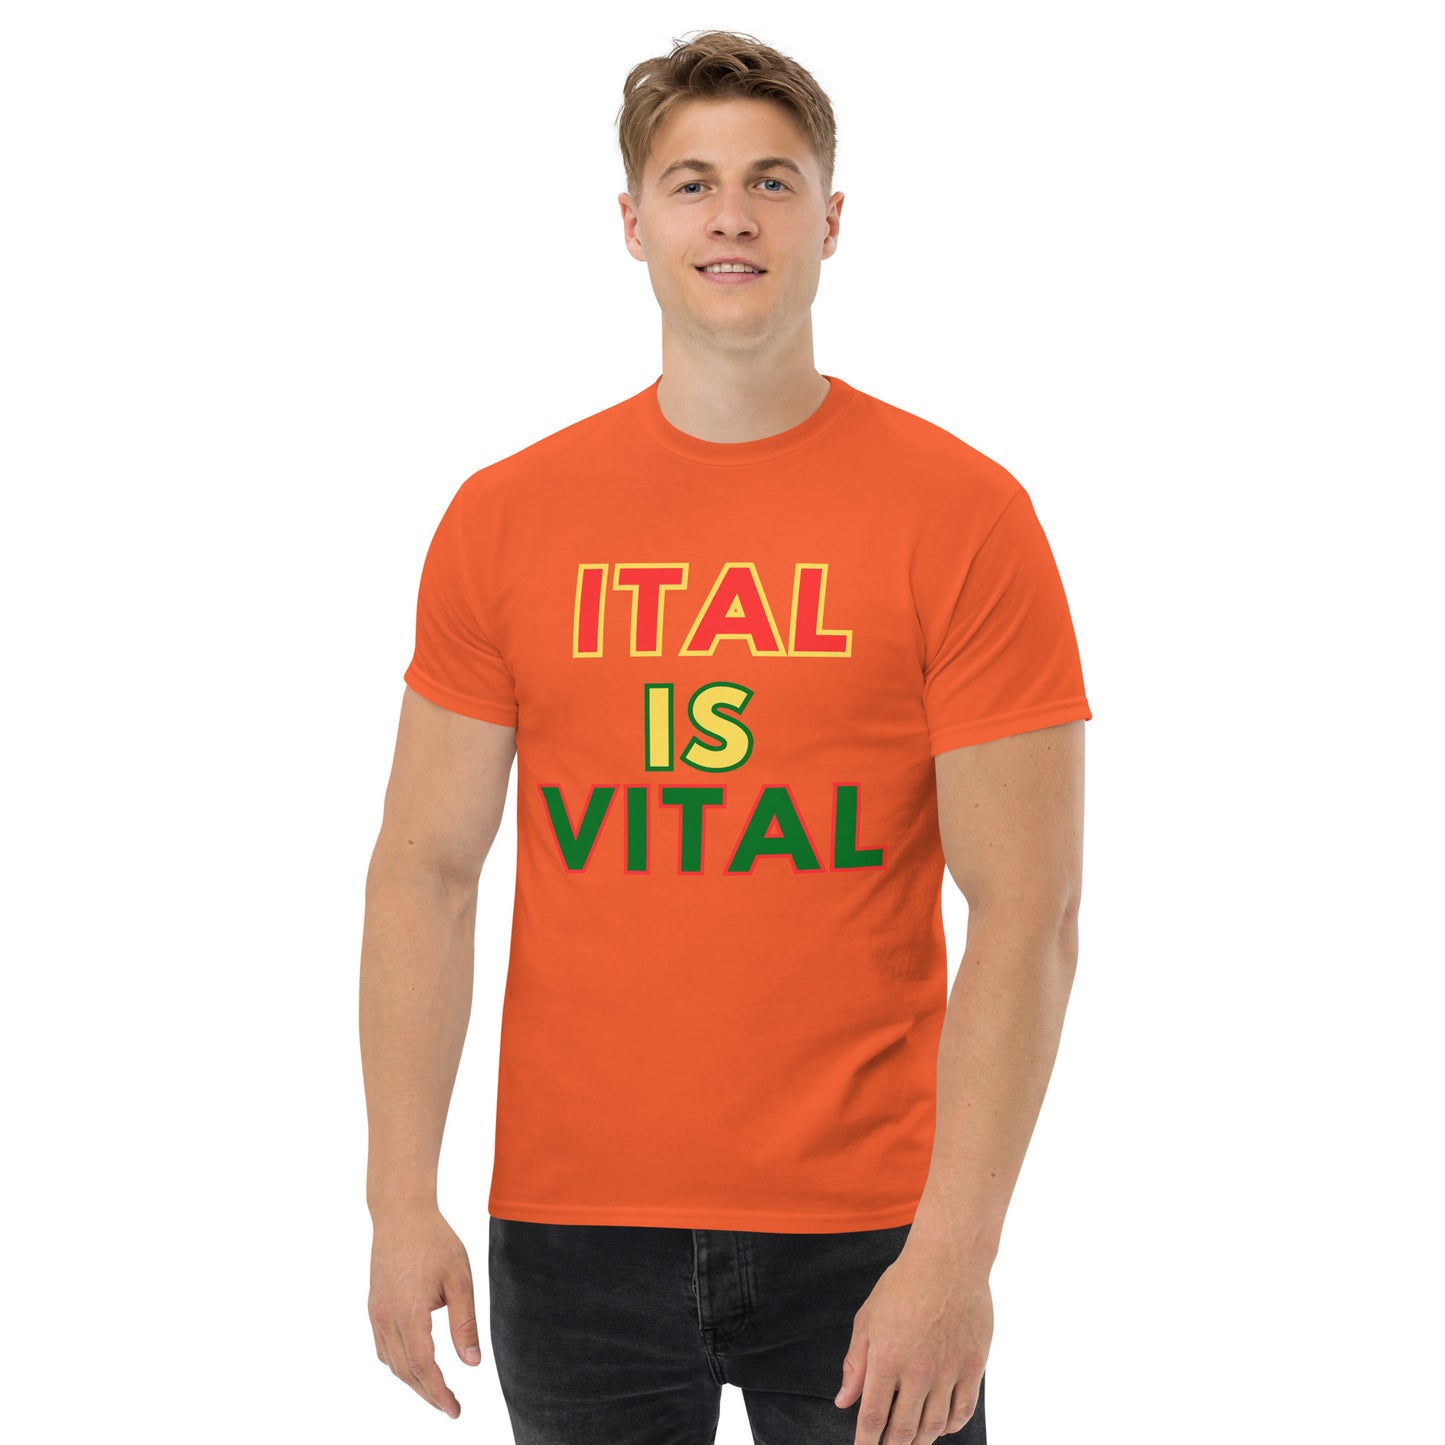 "Ital is vital" Men's T-shirt